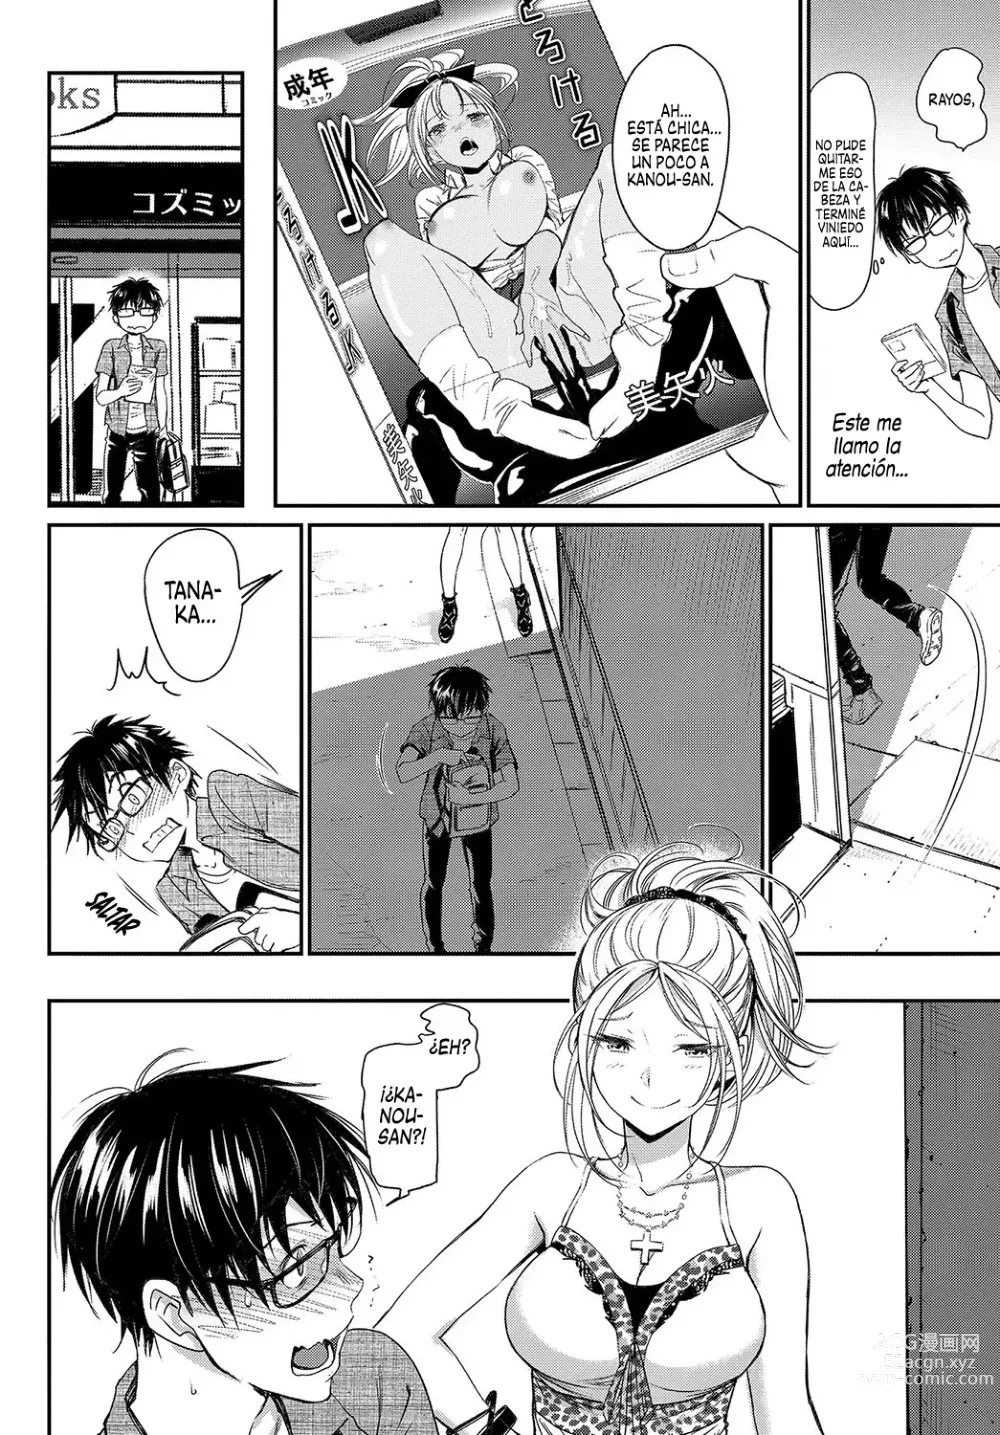 Page 6 of manga Rapsodia de Hacer el Amor